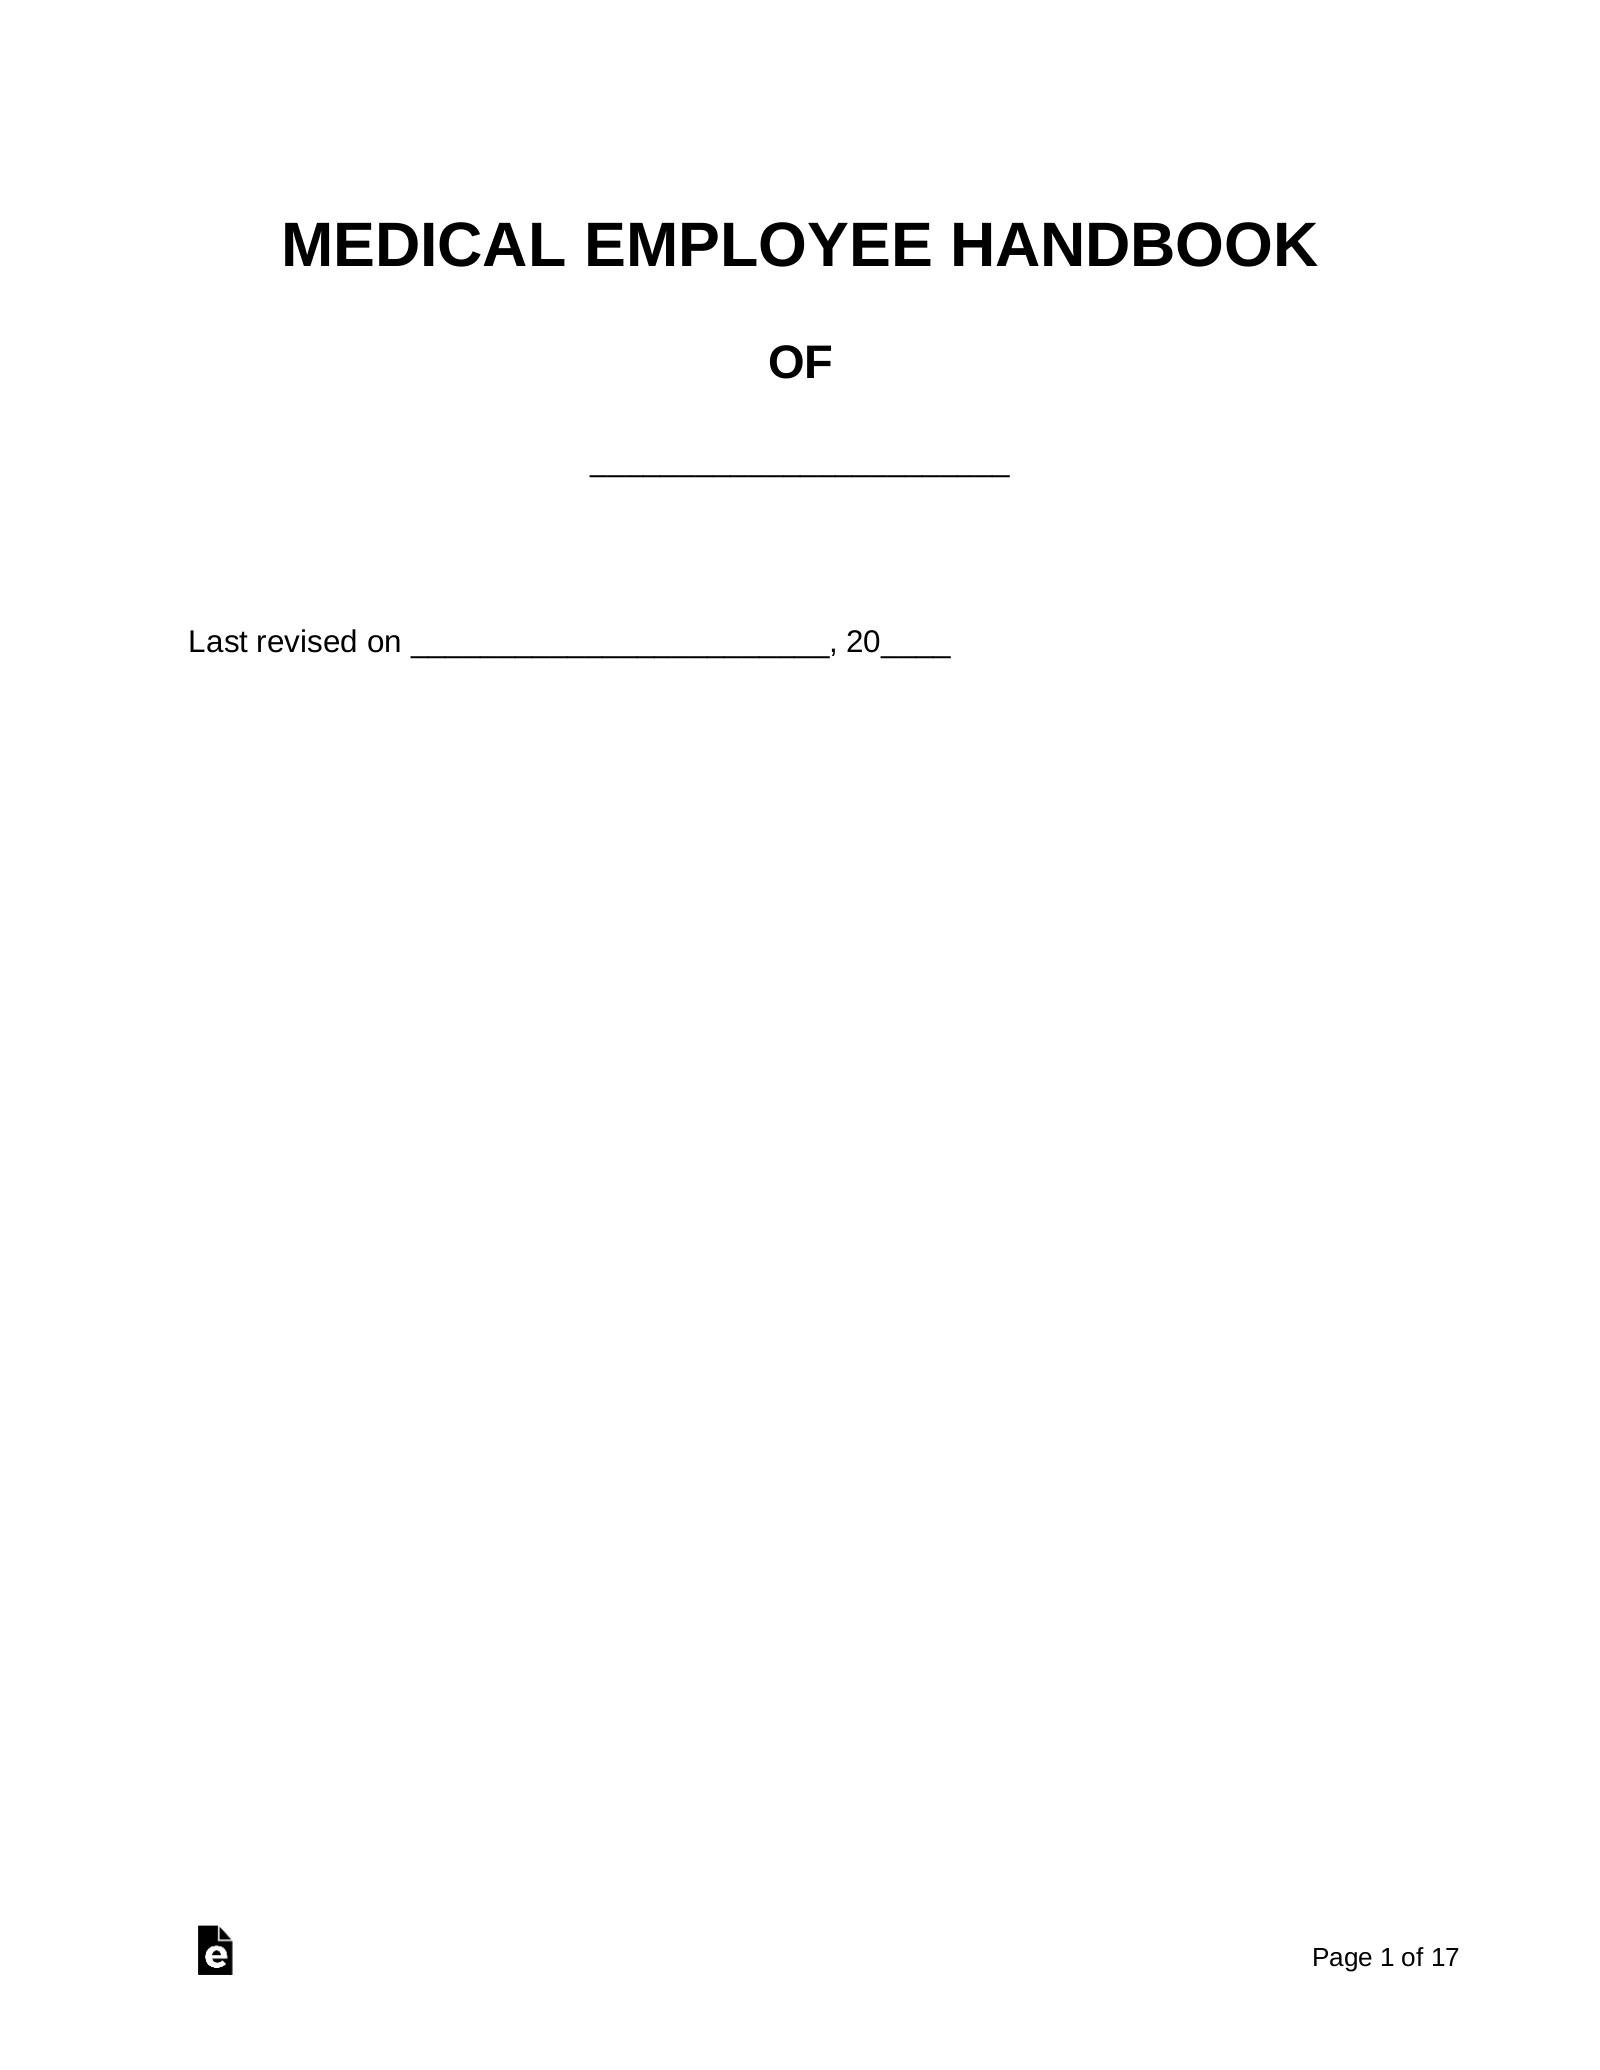 Medical Office Employee Handbook